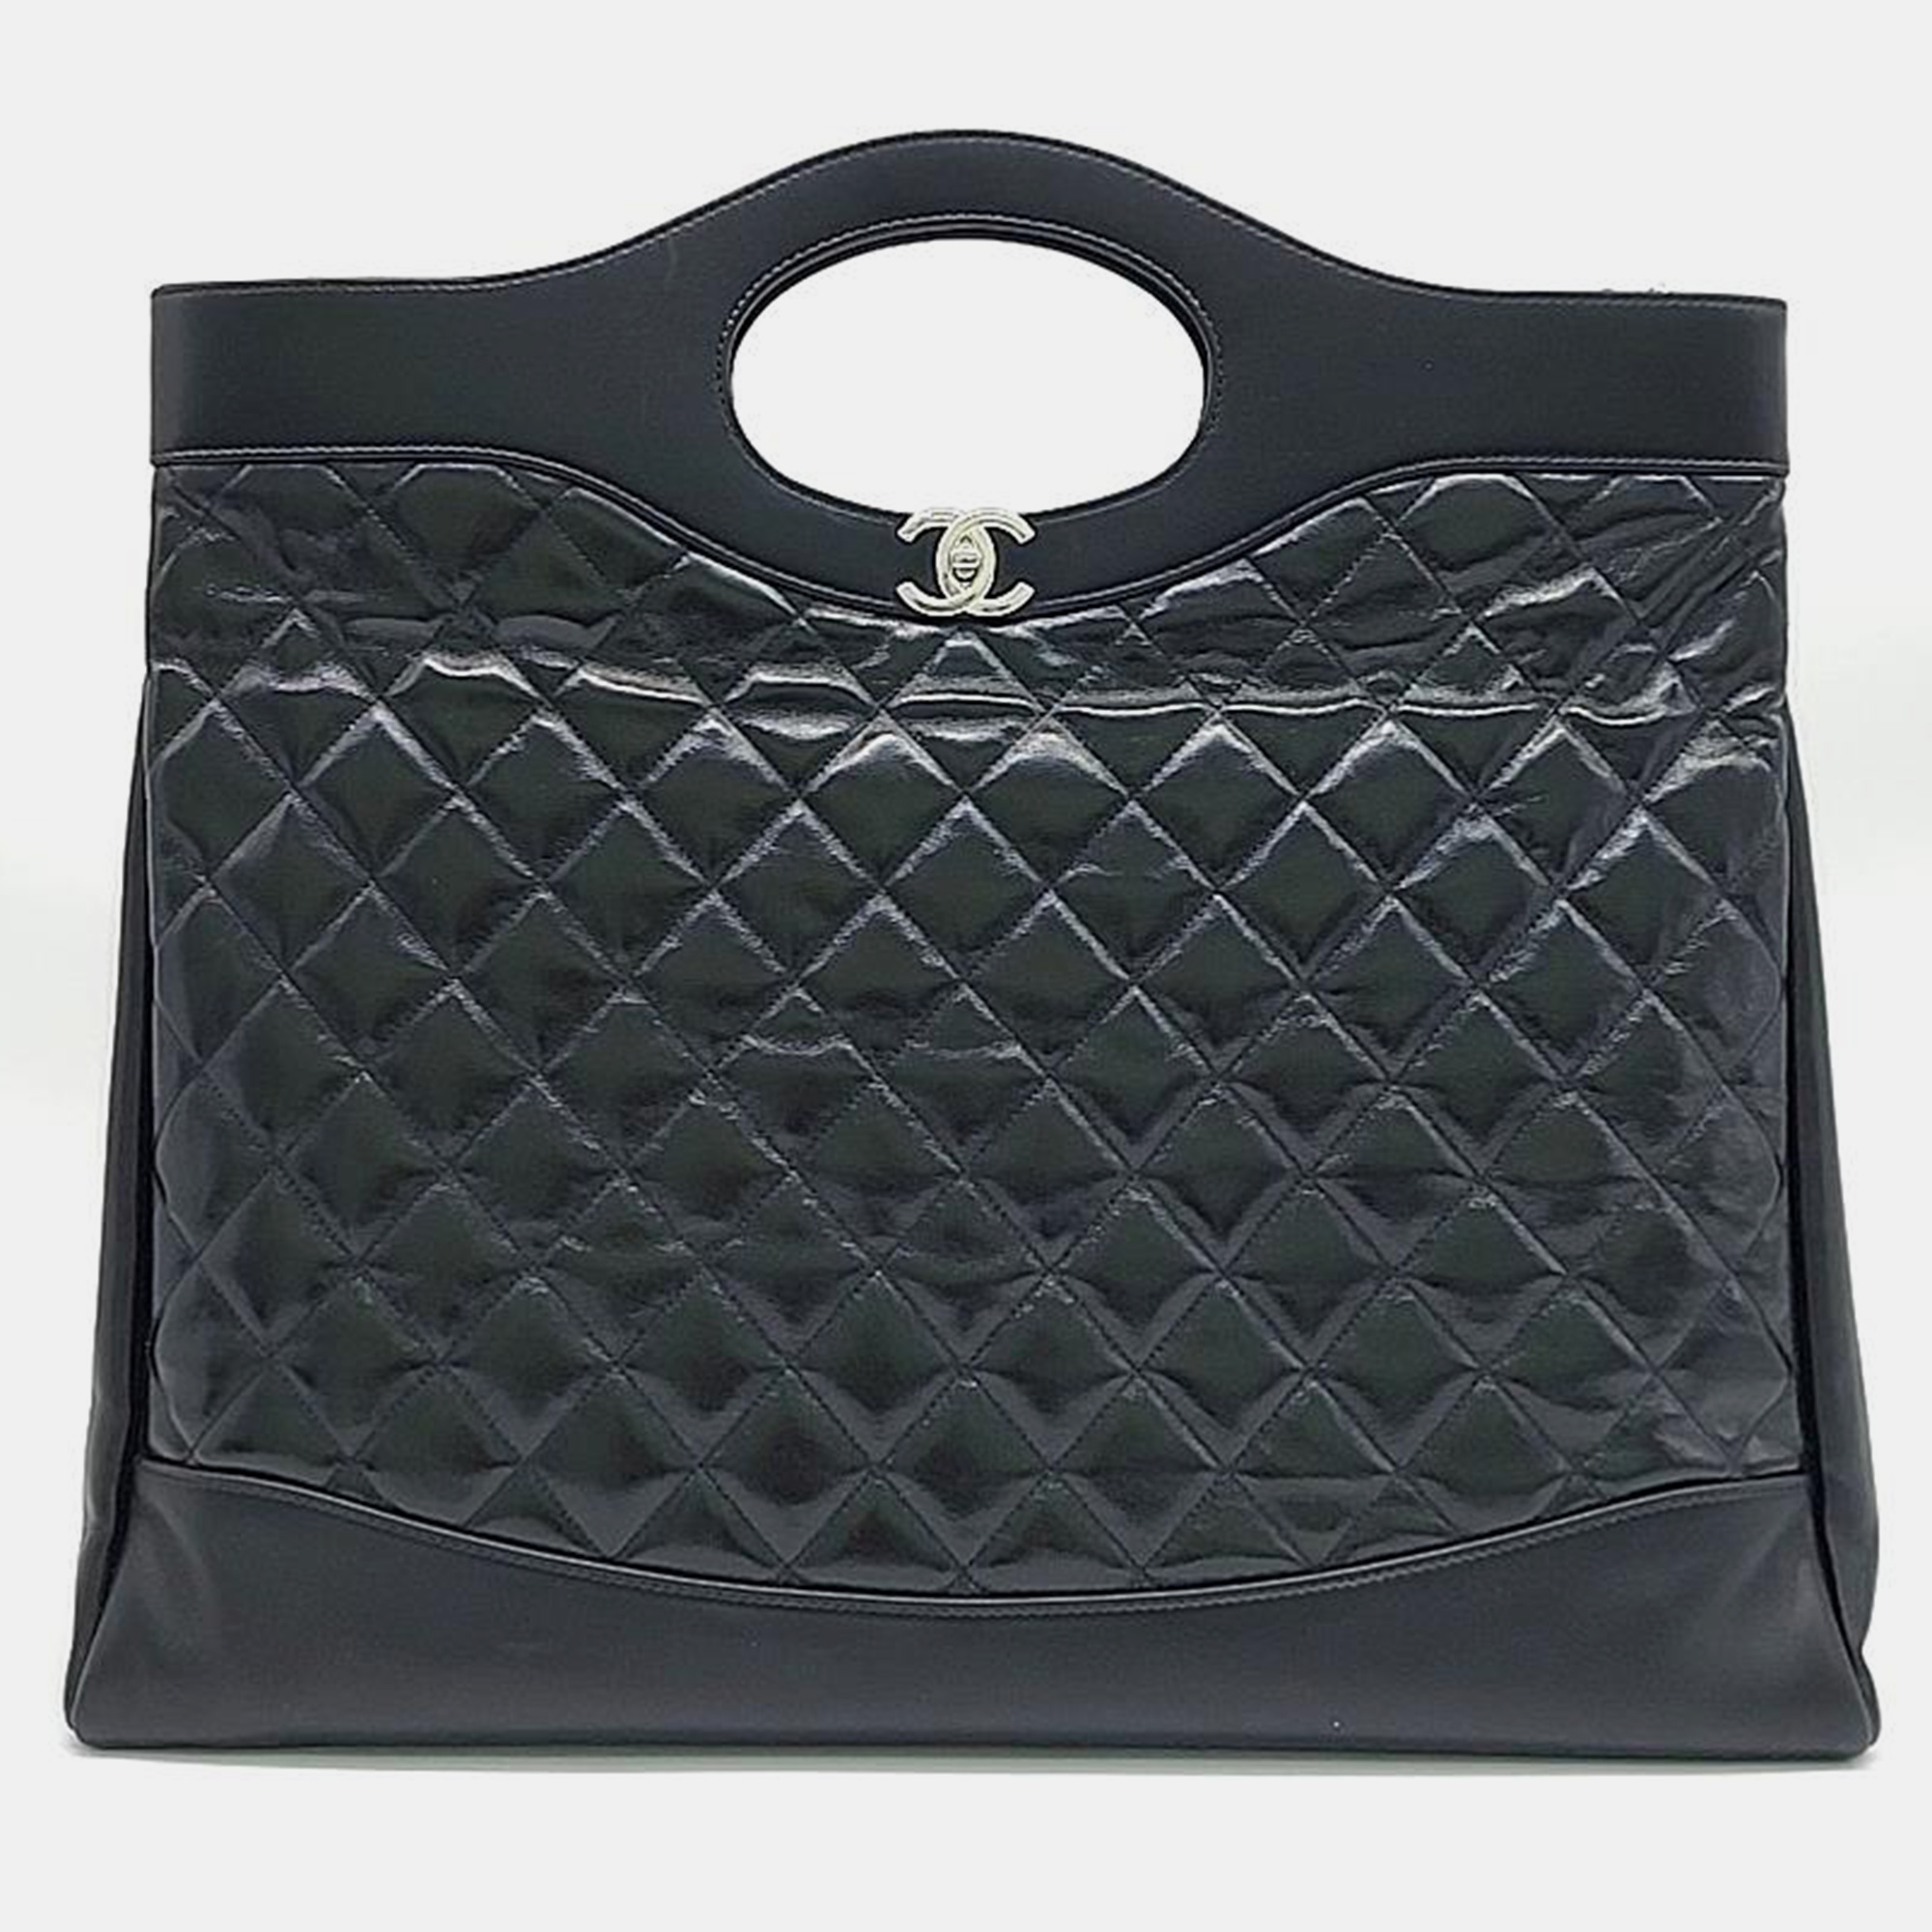 Chanel 31 shopping tote handbag